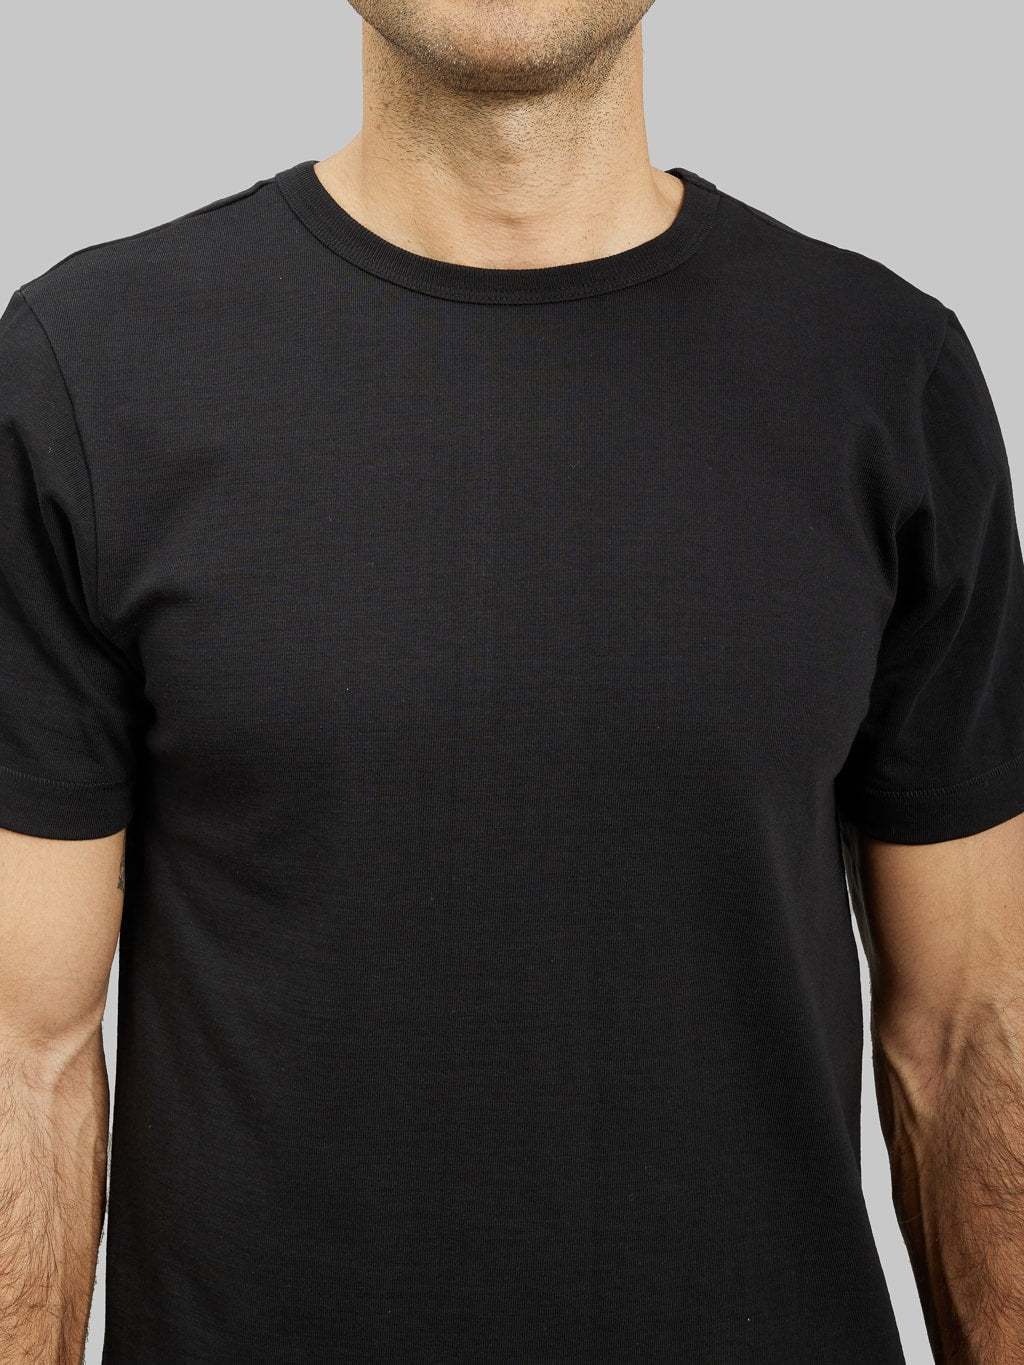 merz b schwanen good originals loopwheeled Tshirt classic fit black chest details